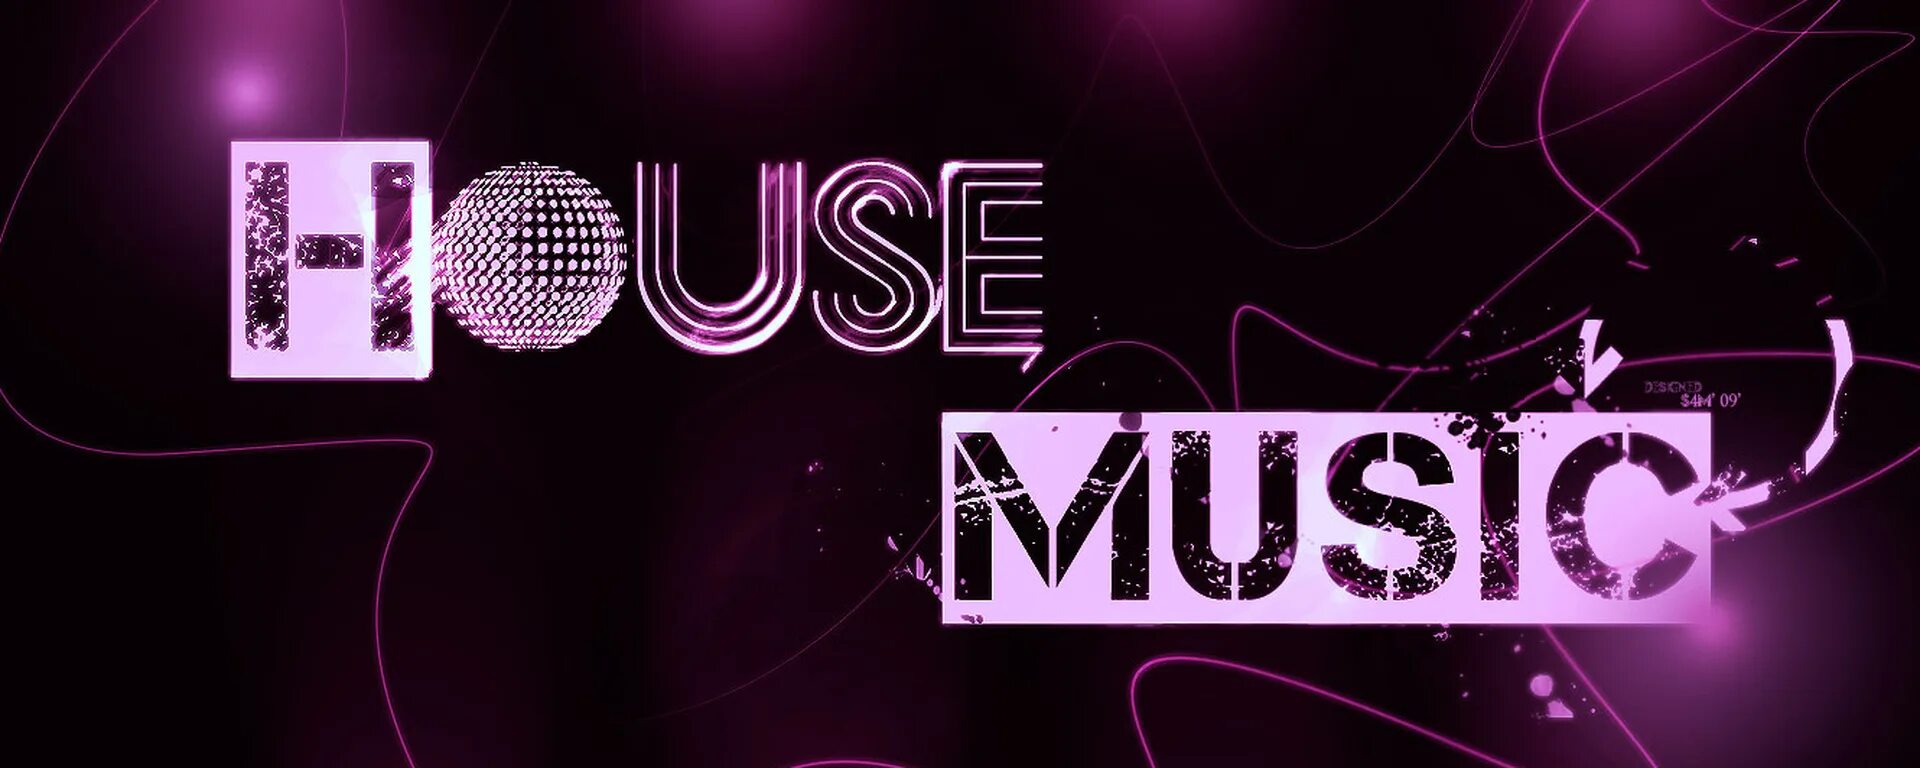 Хаус Мьюзик. House Music картинки. Хаус стиль музыки. House Music обложка. House music 2021